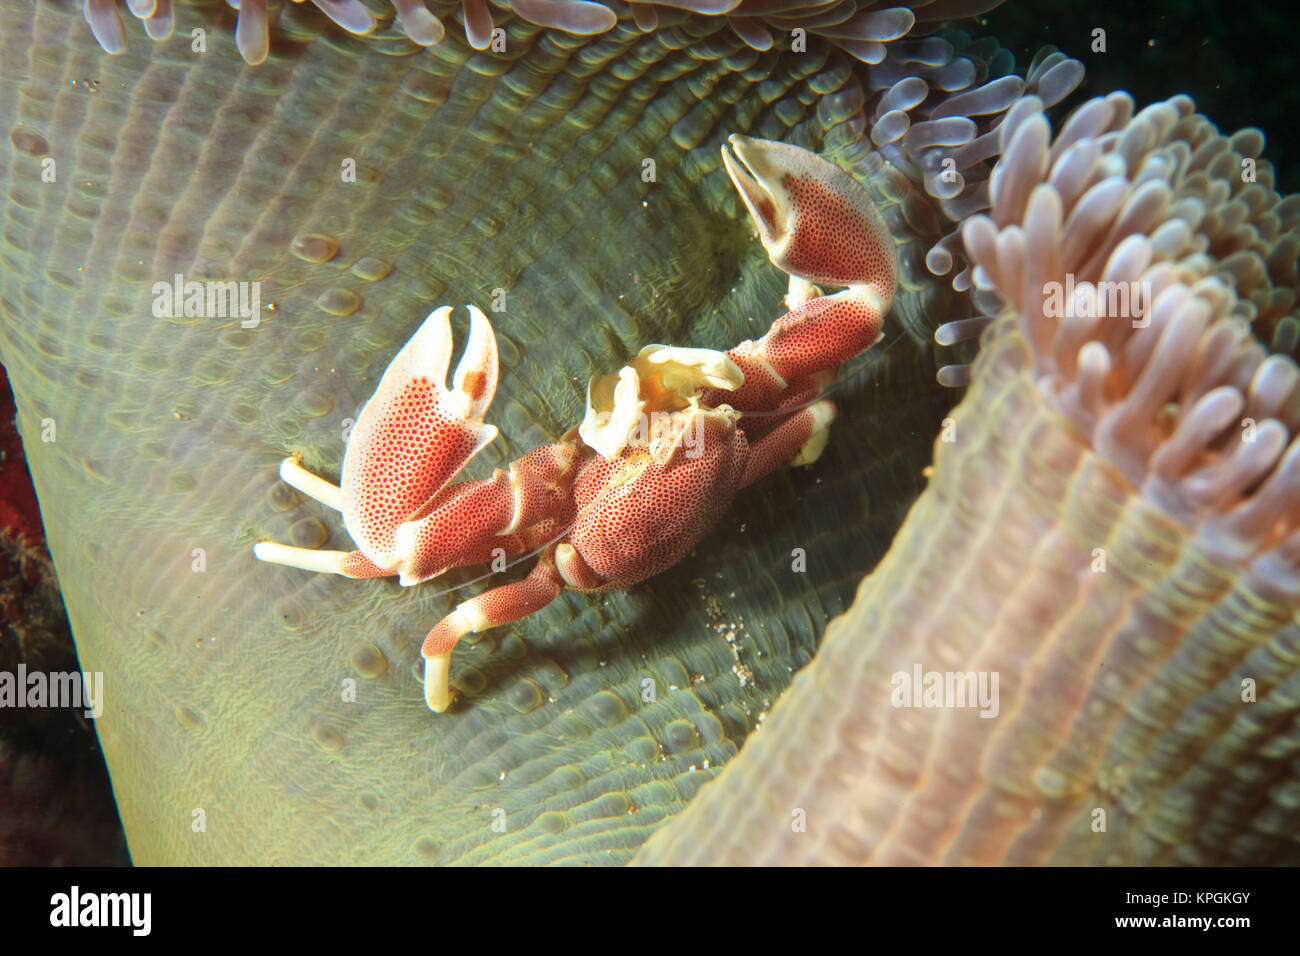 Anemone Crab (Neopetrolisthes ohshimai), Lembata Island waterway between Timor Sea and Flores Sea, Indonesia Stock Photo